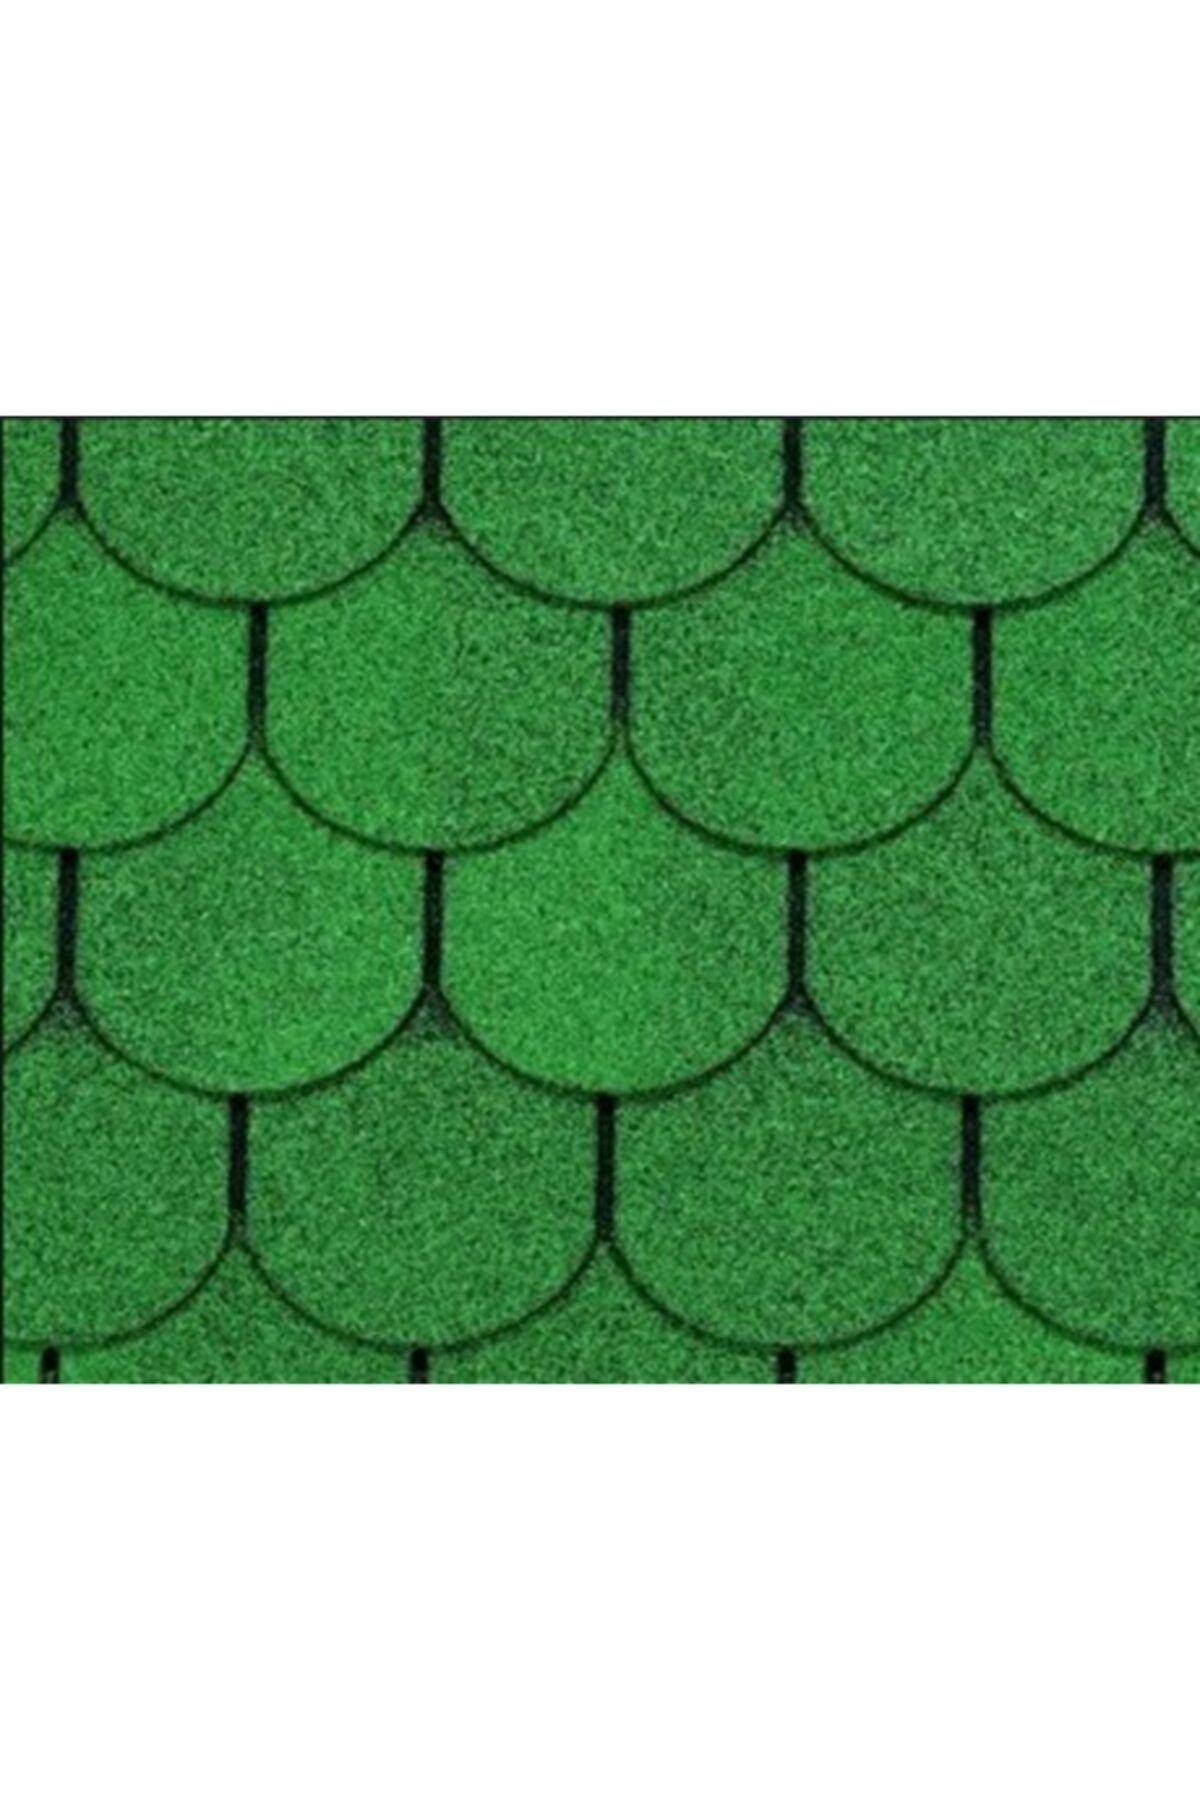 makro Yonca Desen Yaprak Şıngıl Yeşil 2,60 Mt2 Shingle